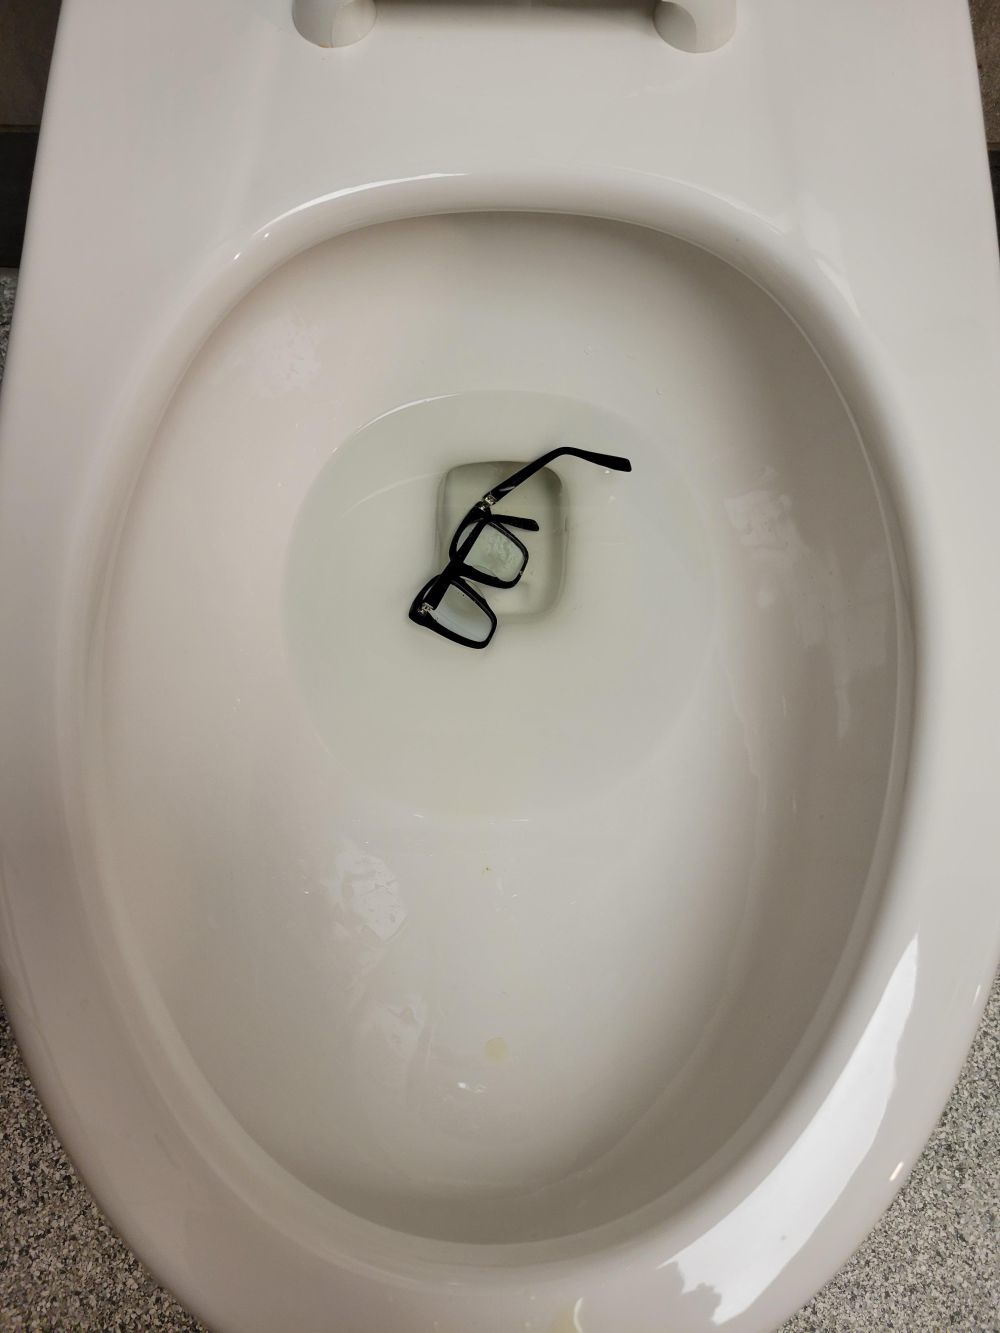 9 Momen Ngeselin saat di Toilet Umum, Kacamata Jatuh di Kloset!